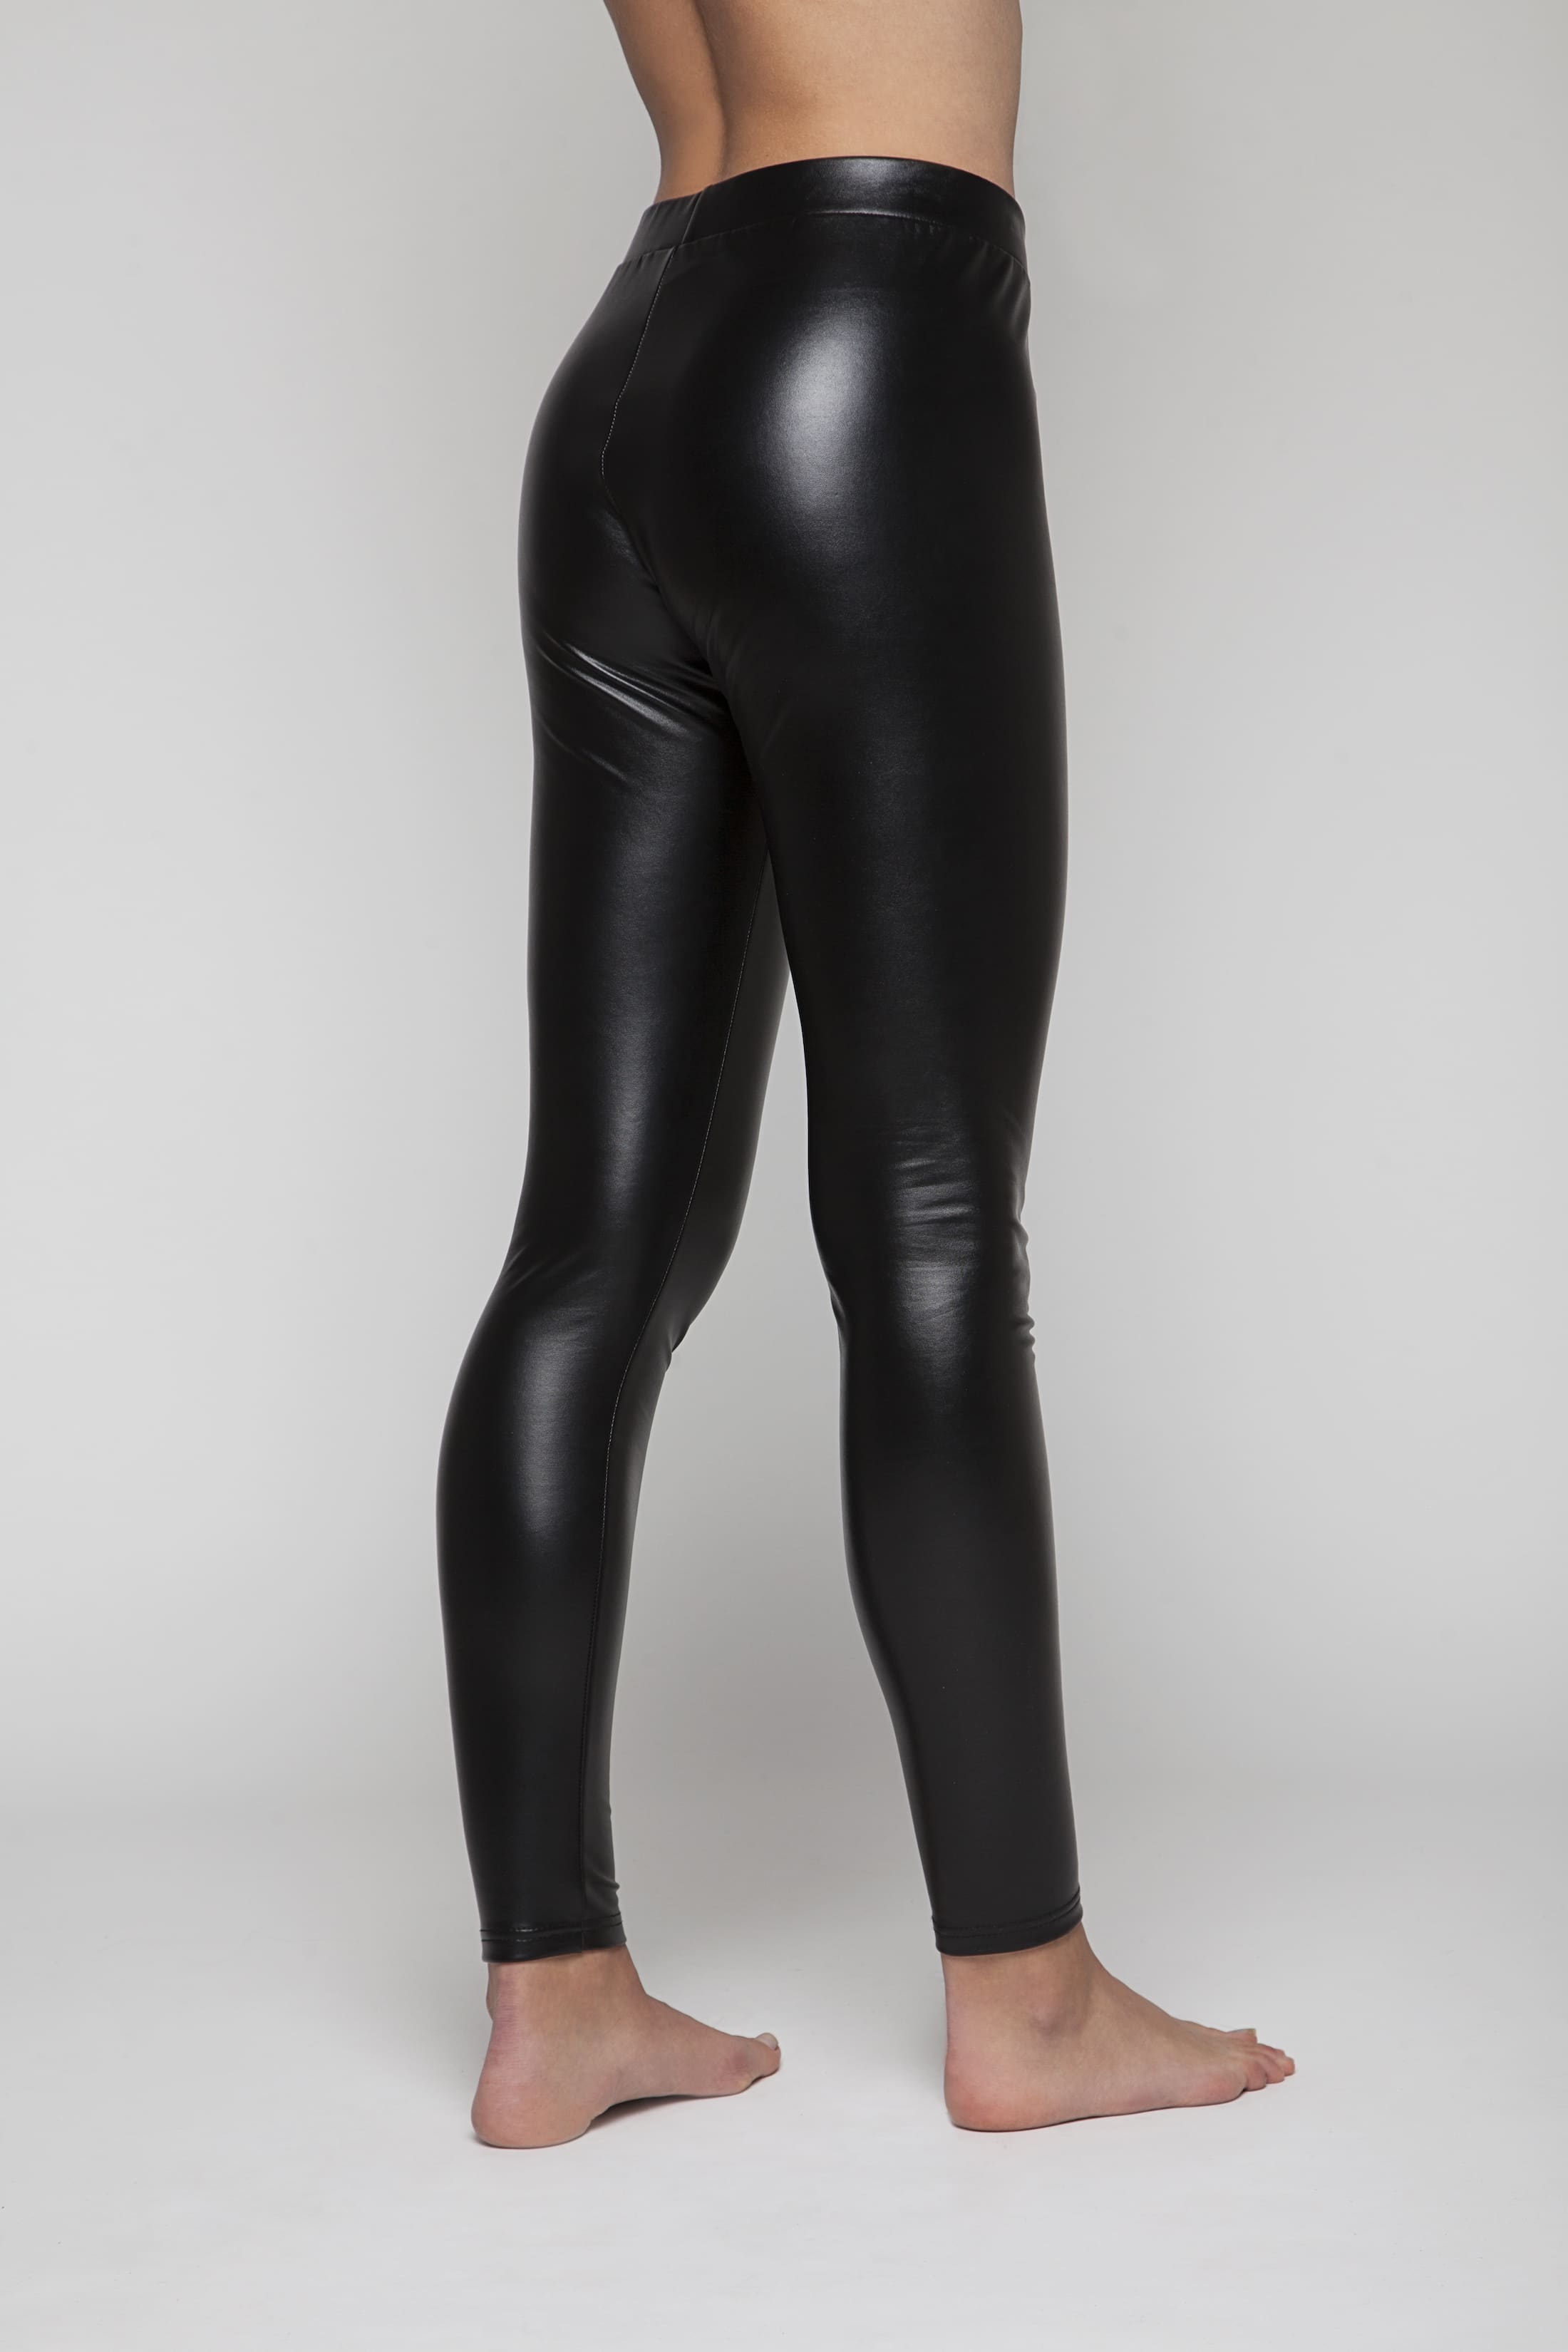 Black faux leather stretch leggings